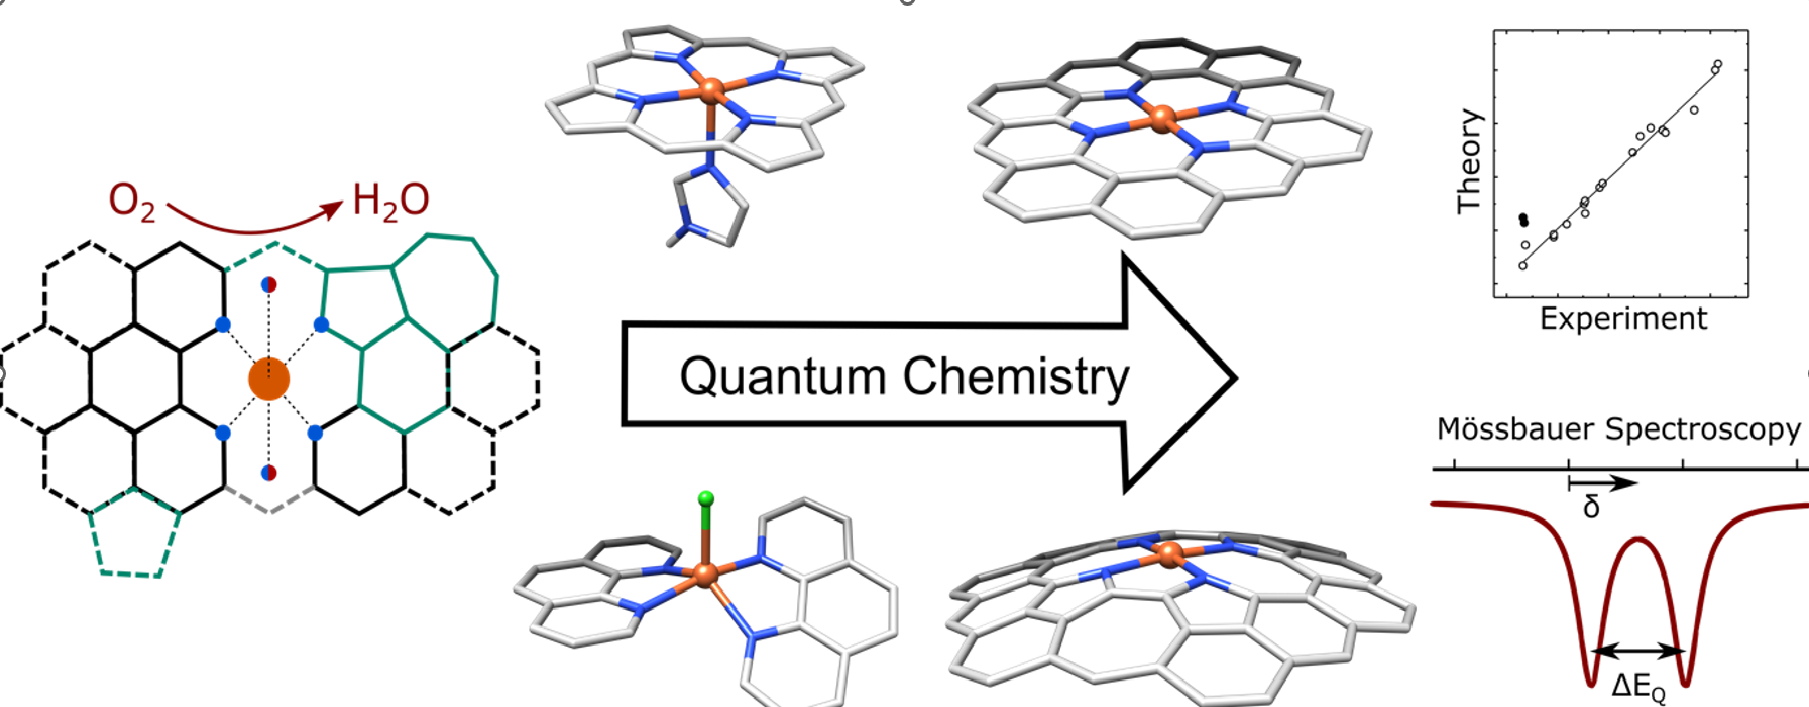 Figure: Quantum Chemistry Model